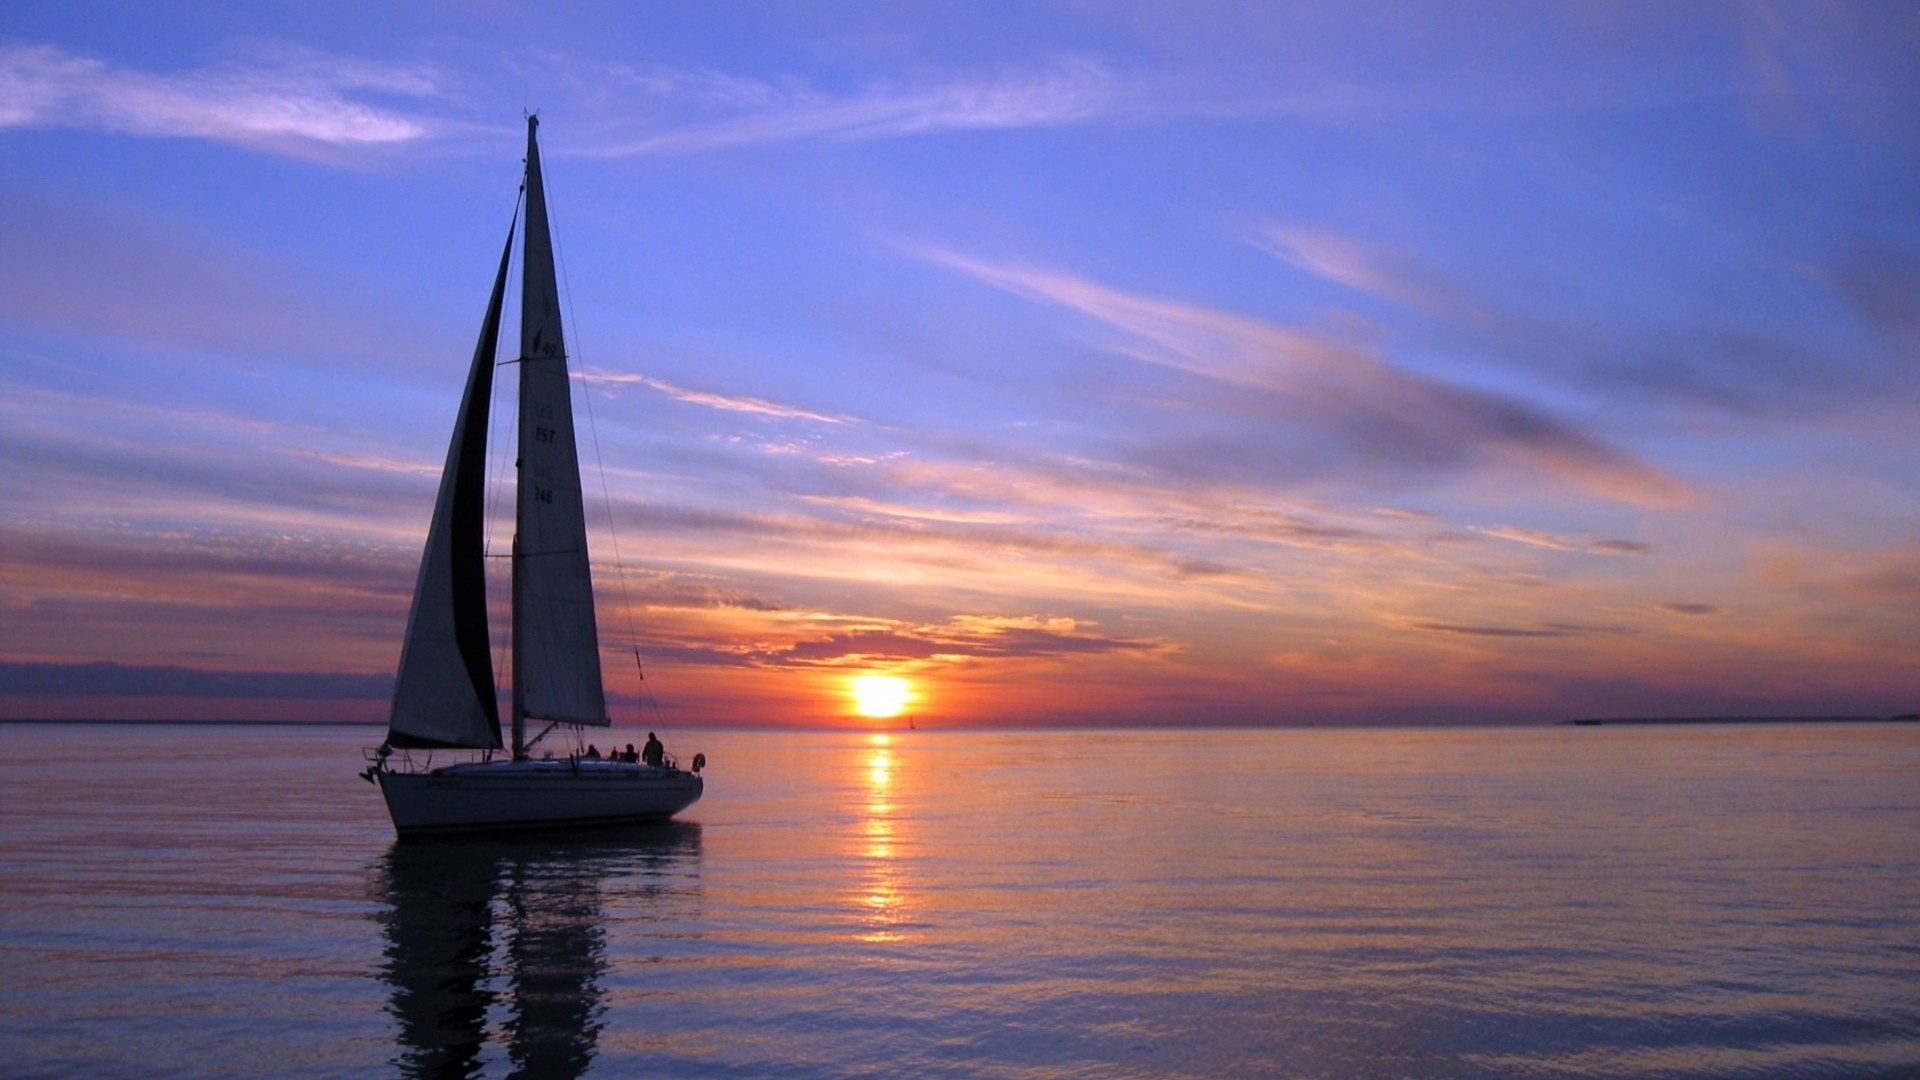 1920x1080 Boats silboat boats ship sailing ocean sea sky clouds sunset sunrise  wallpaper |  | 42357 | WallpaperUP